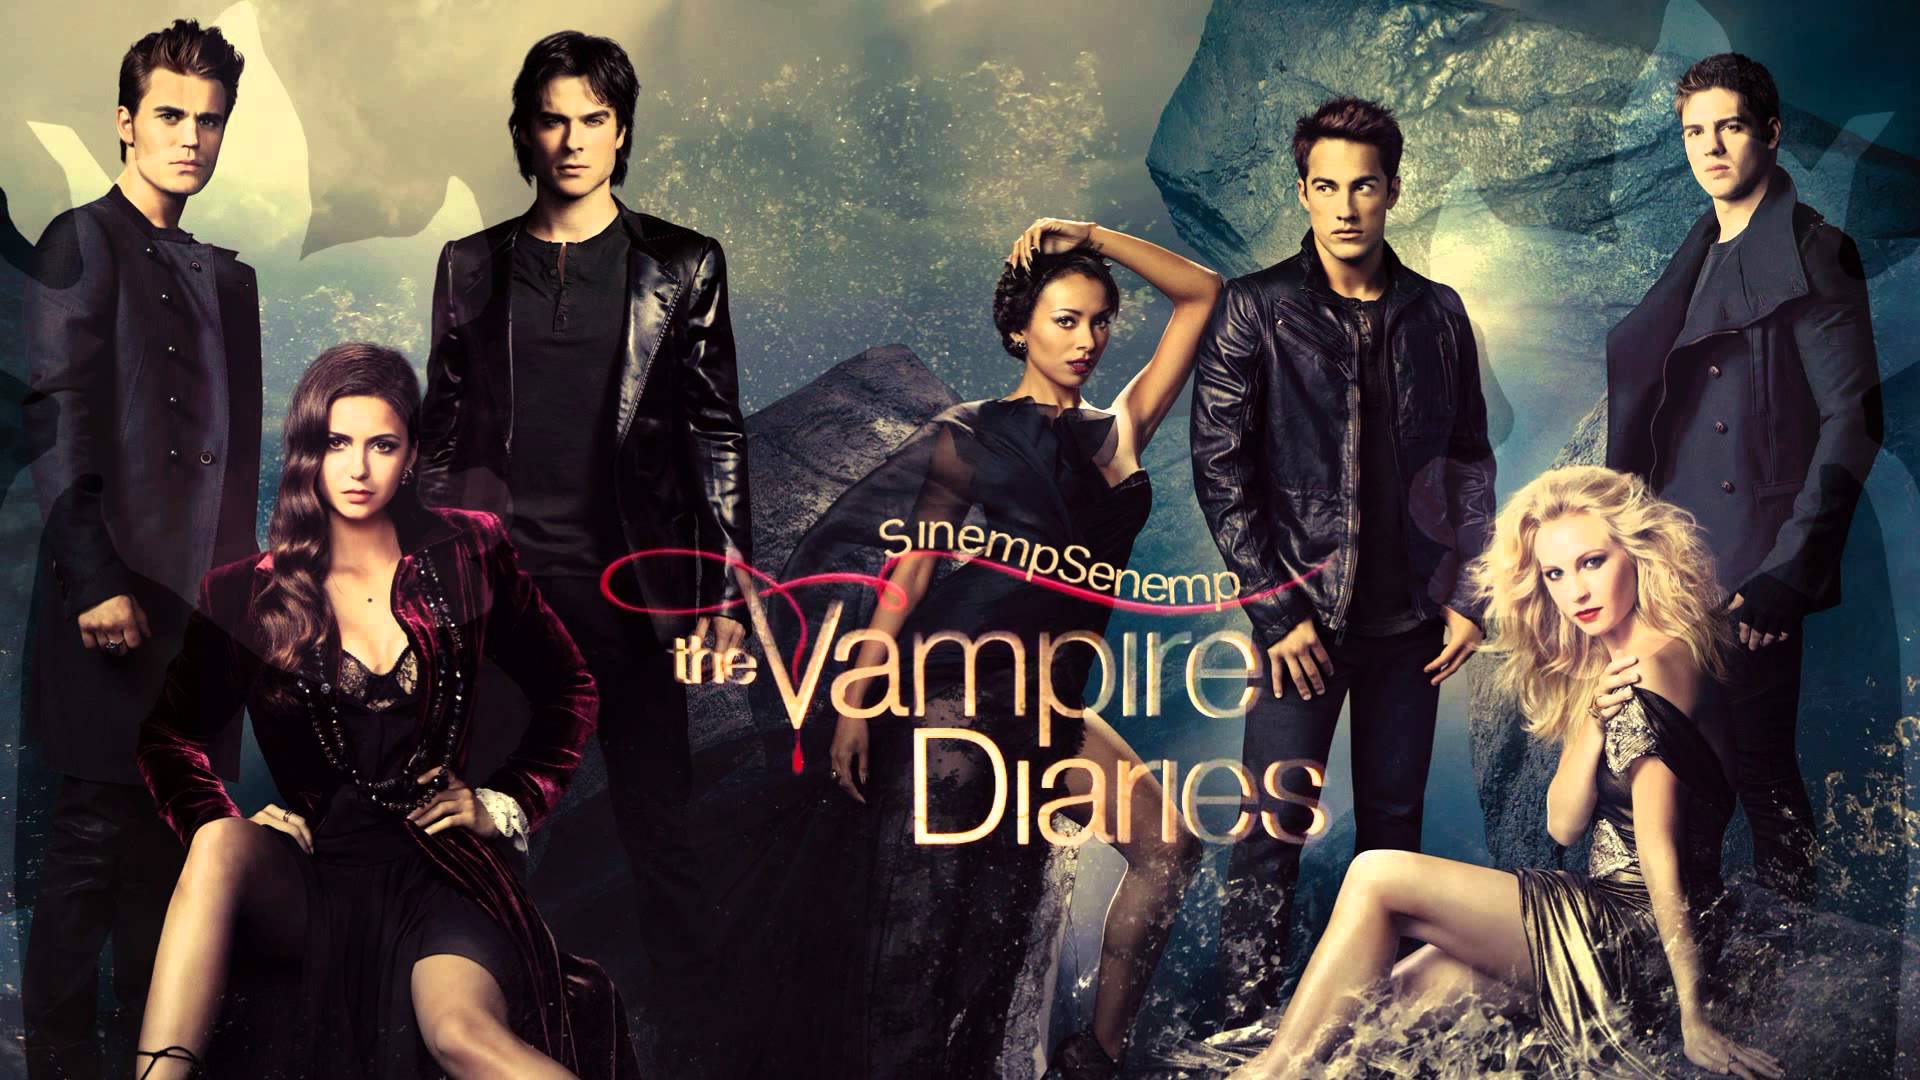 The Vampire Diaries Season 6 HD Wallpaper, Background Image